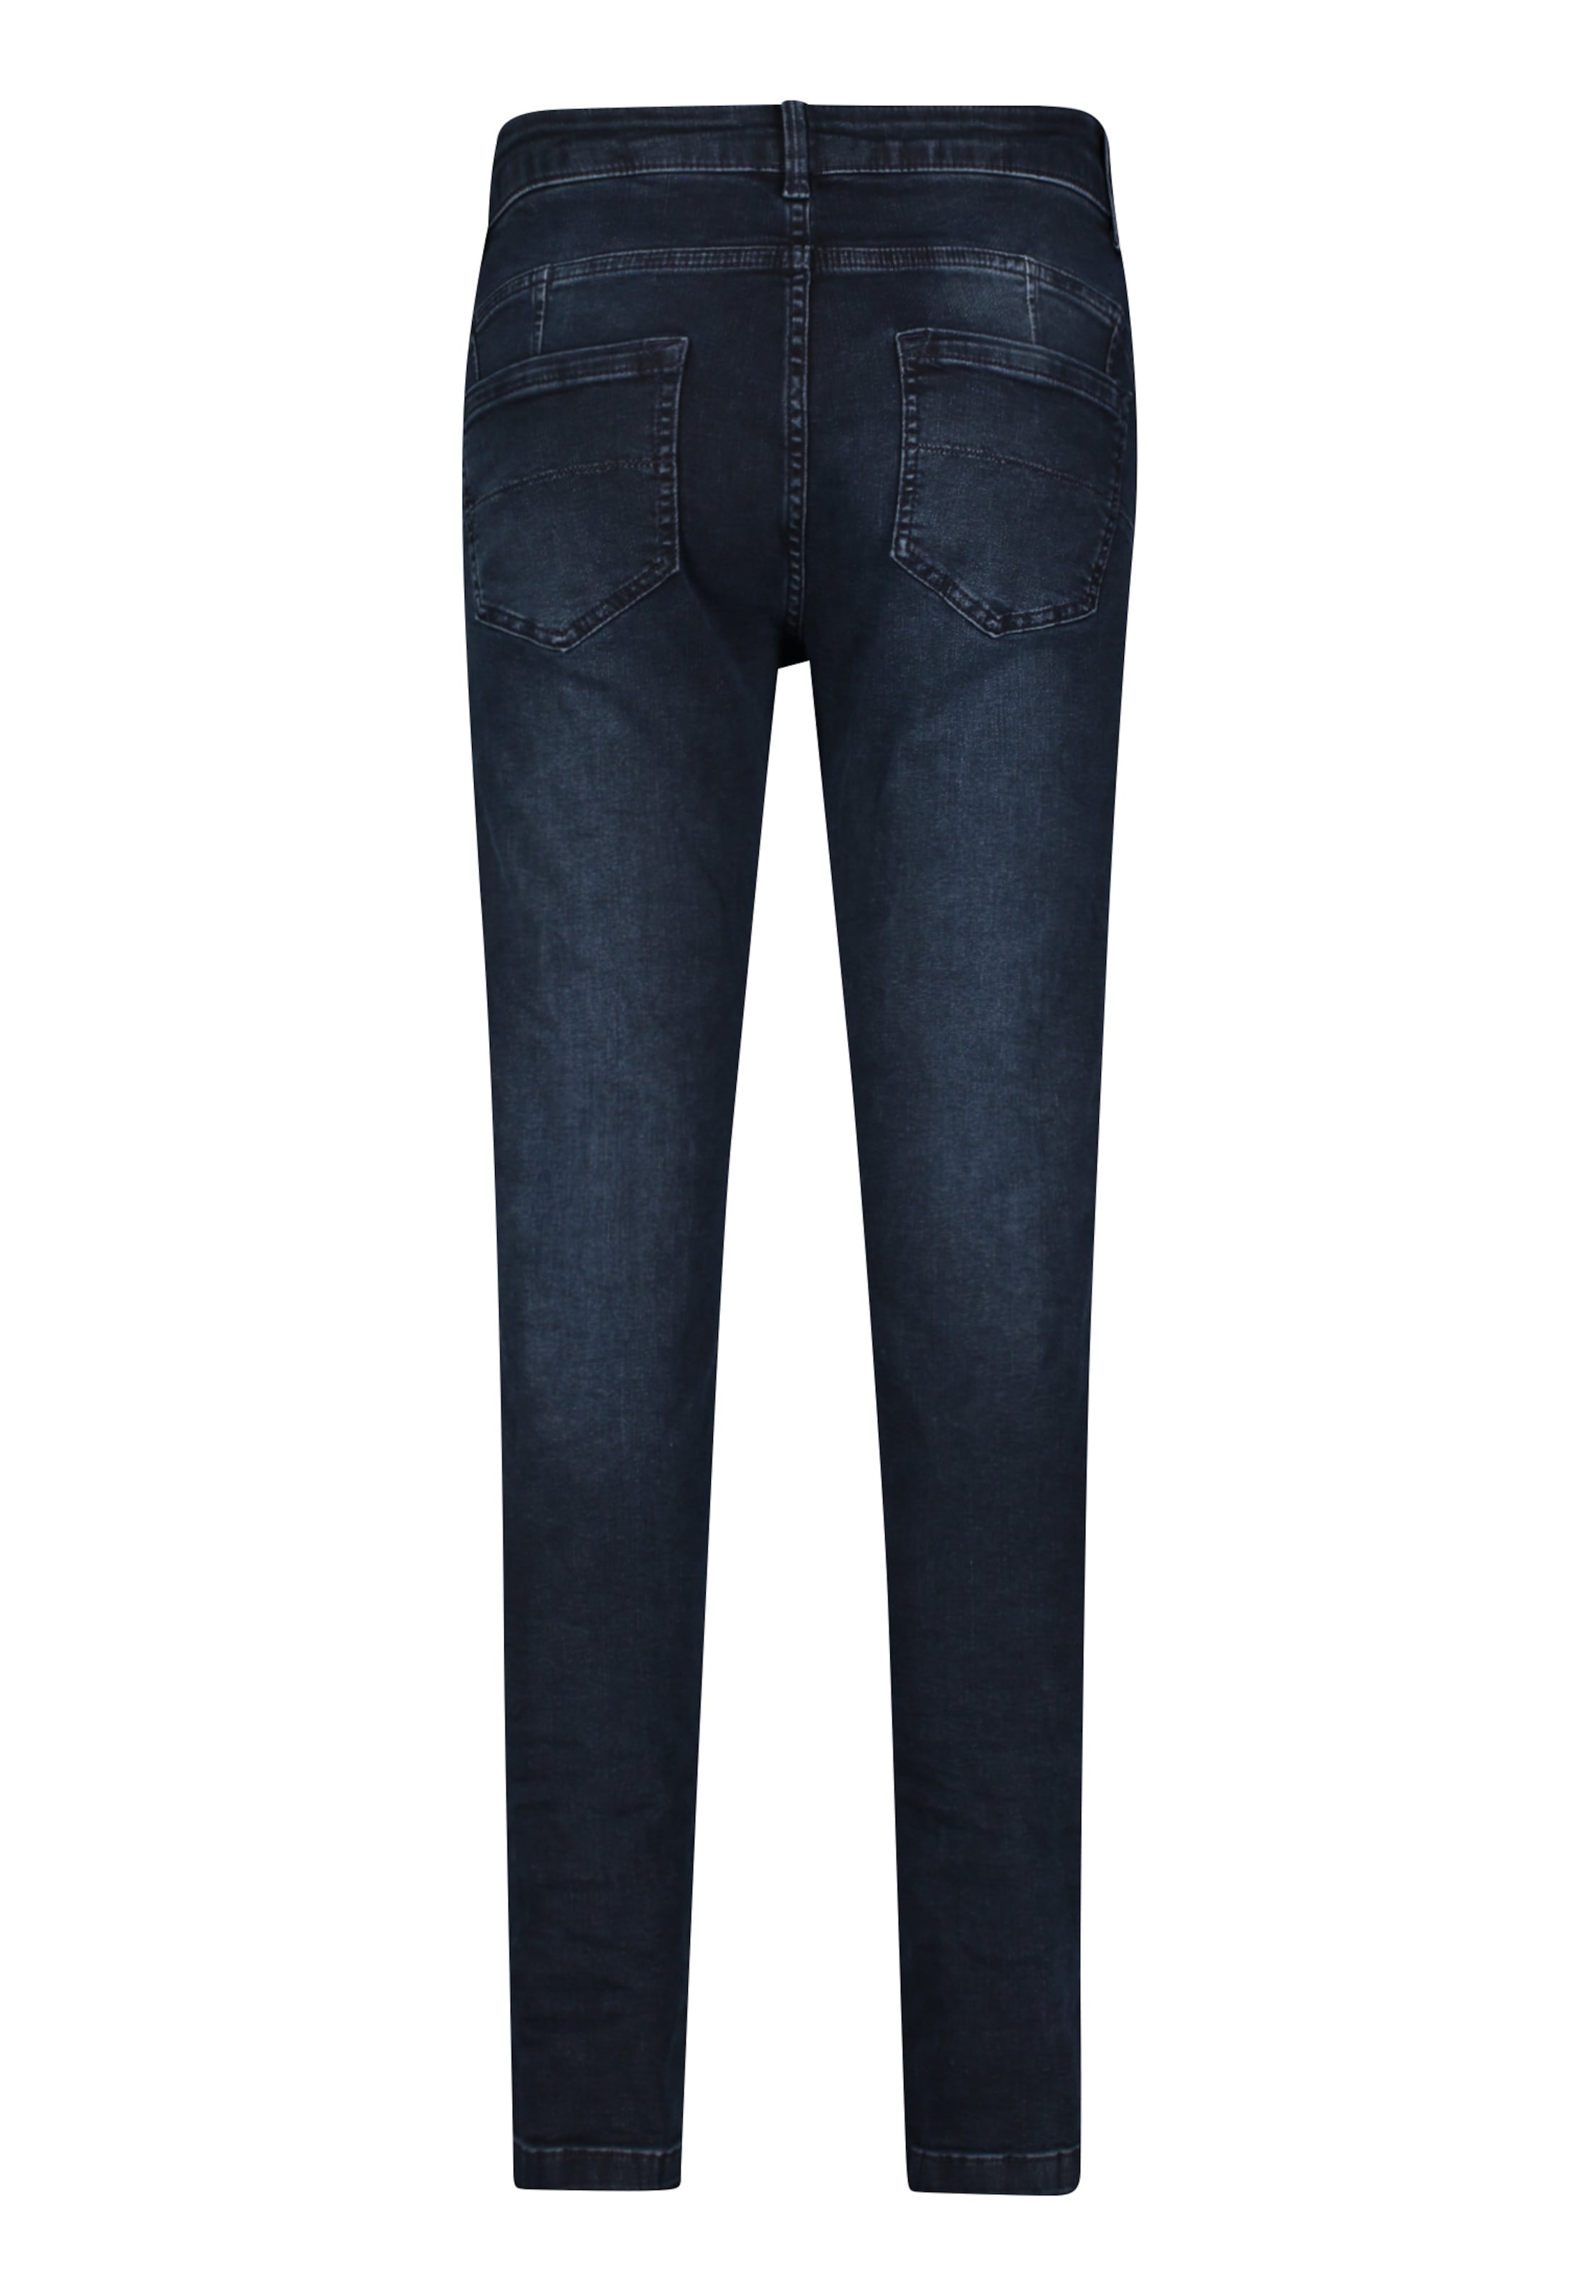 Frauen Jeans Cartoon Casual-Hose Slim Fit in Dunkelblau - CS36745